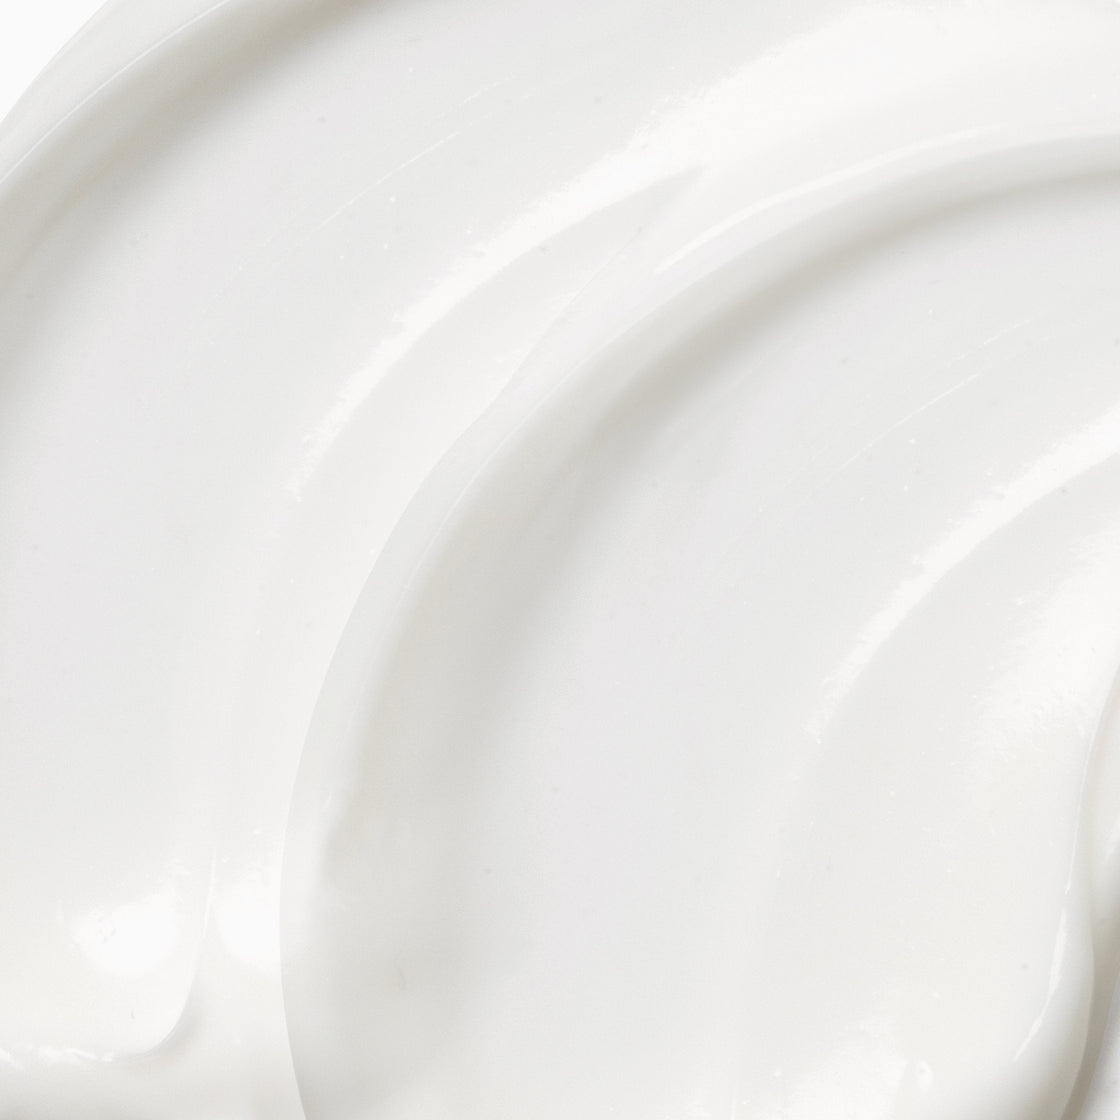 A close up of Firming Neck Cream rich texture,